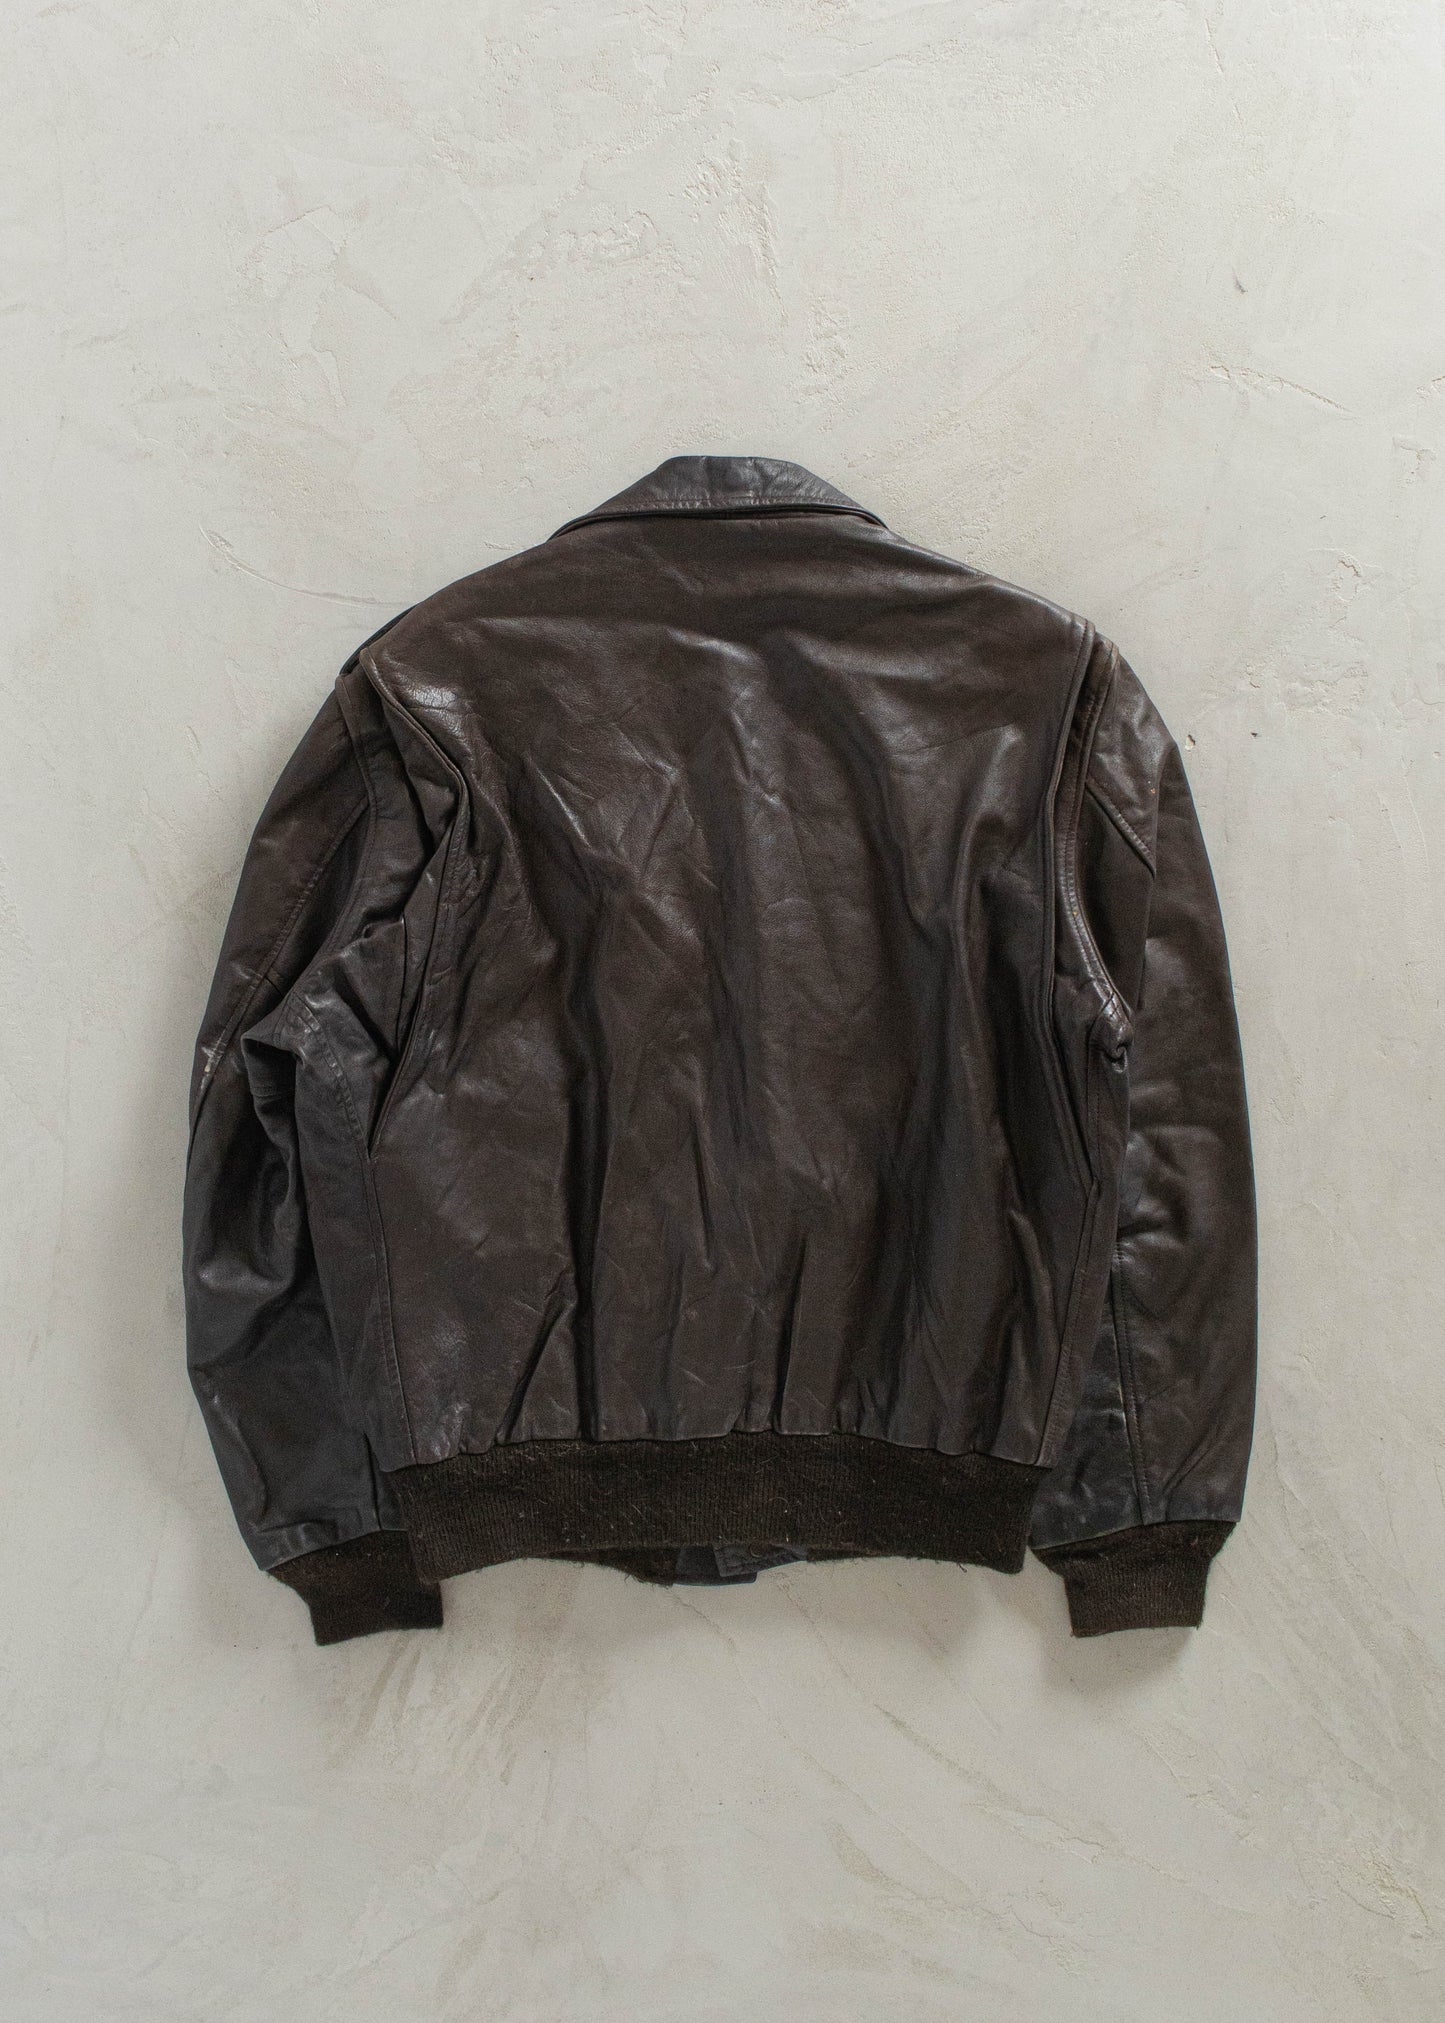 1980s Golden Fleece Leather Bomber Jacket Size S/M